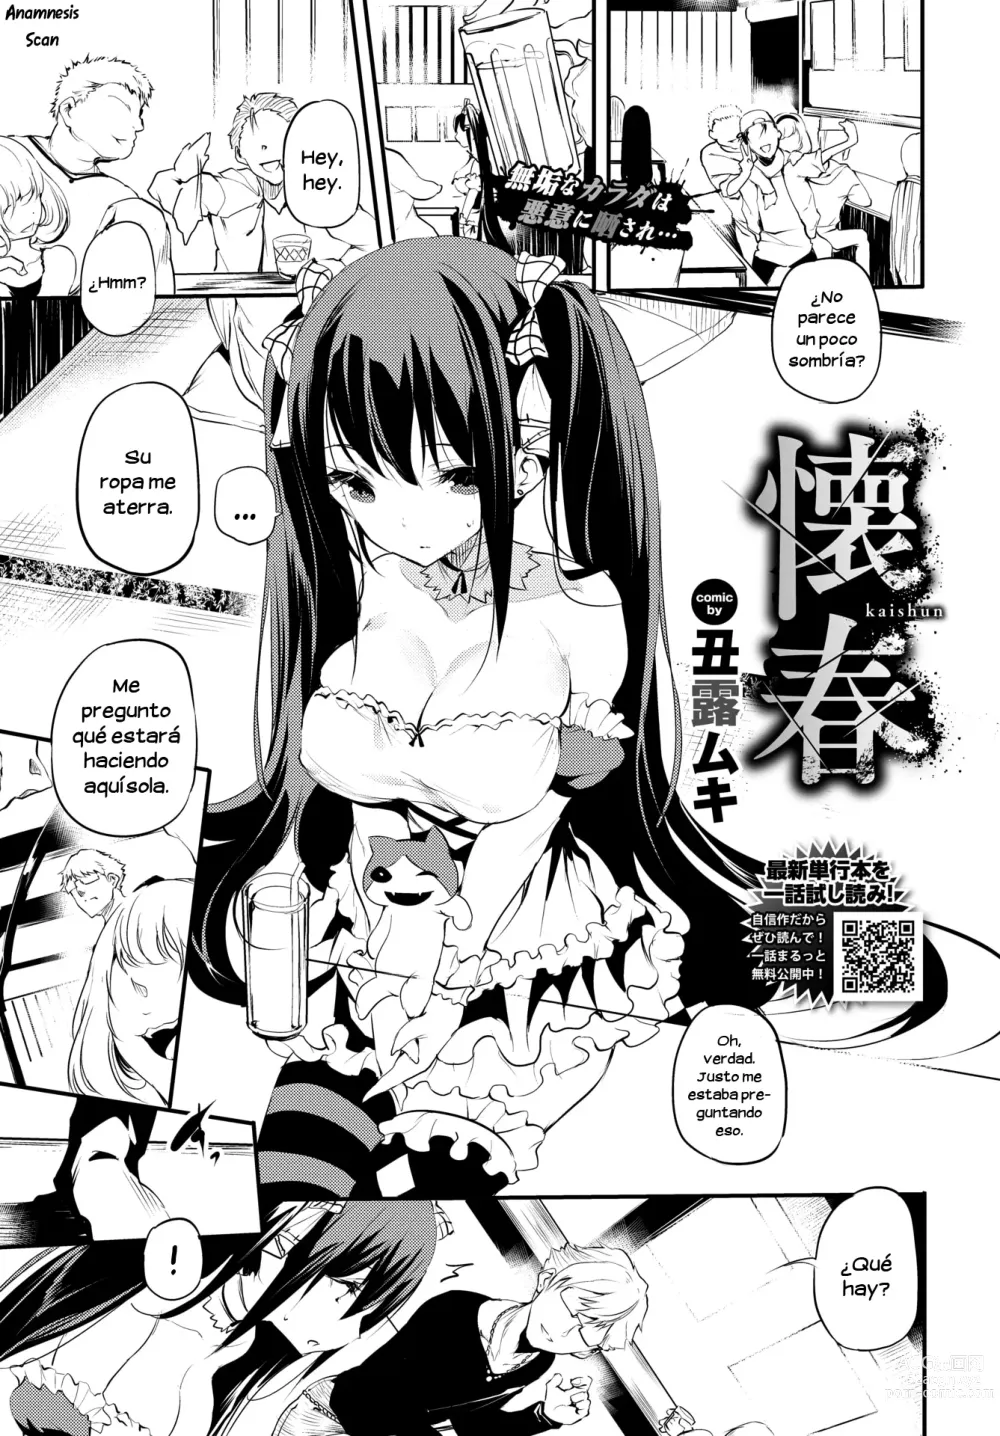 Page 1 of manga Kaishun